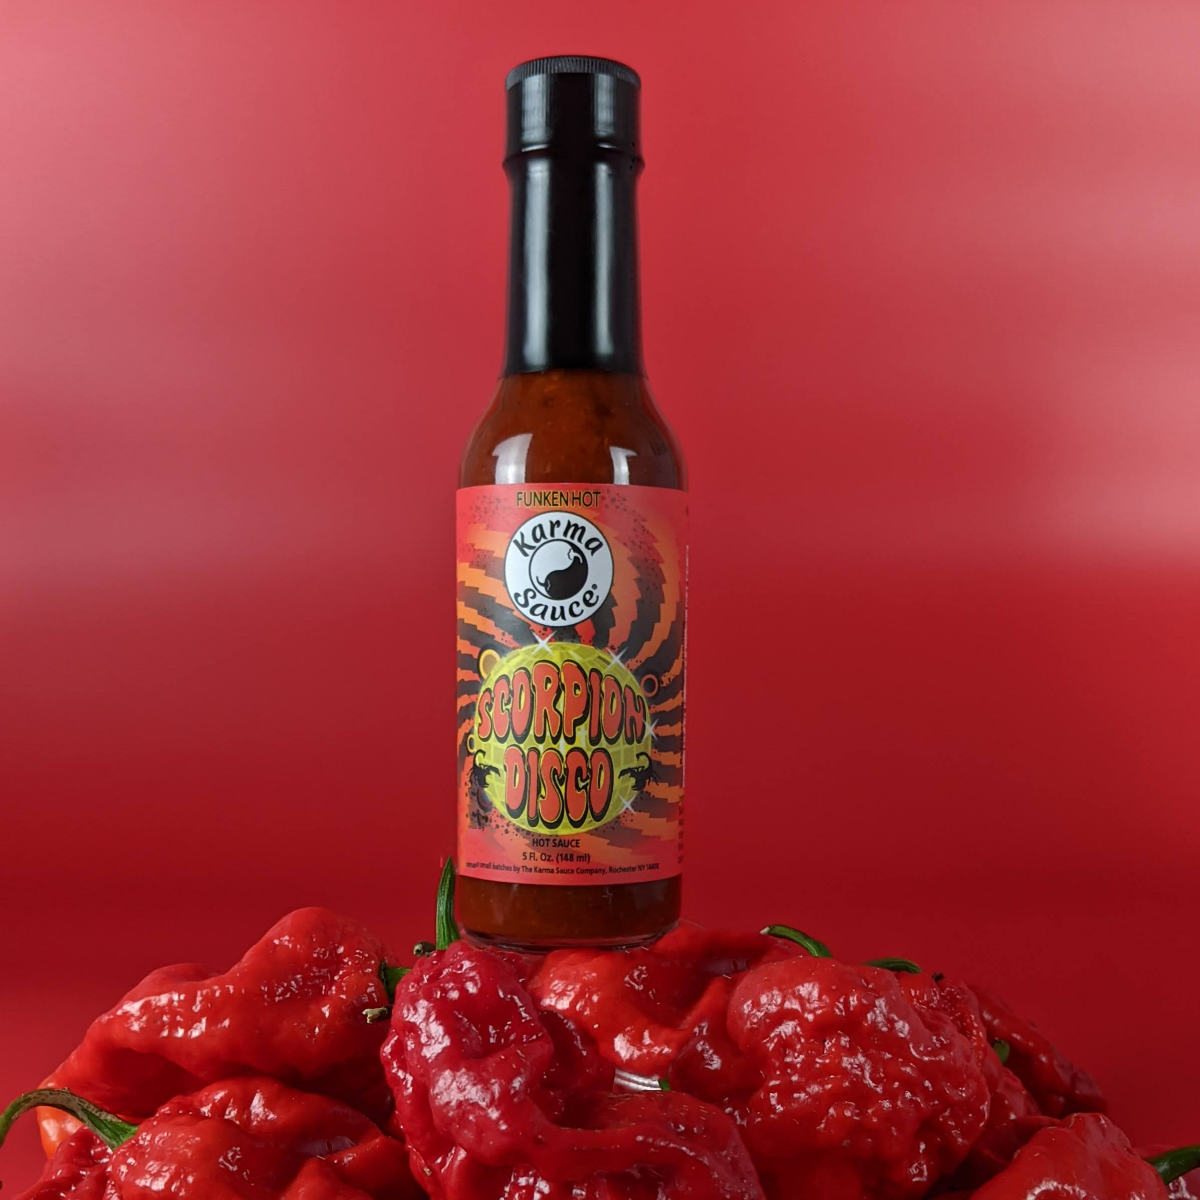 Scorpion Disco Hot Sauce- Great gift